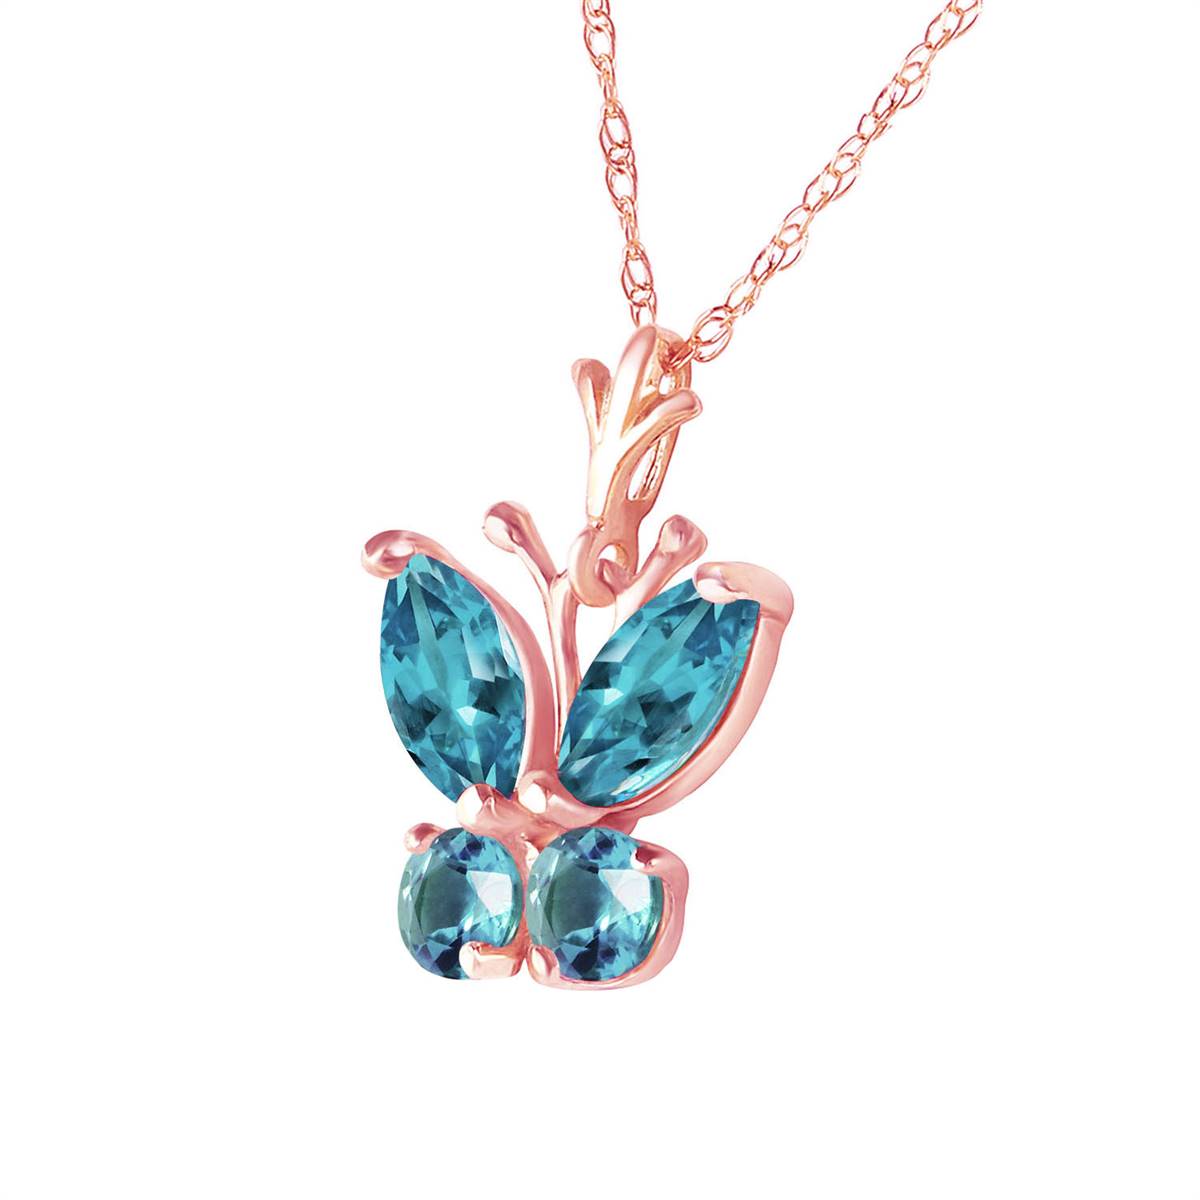 0.6 Carat 14K Solid Rose Gold Butterfly Necklace Blue Topaz